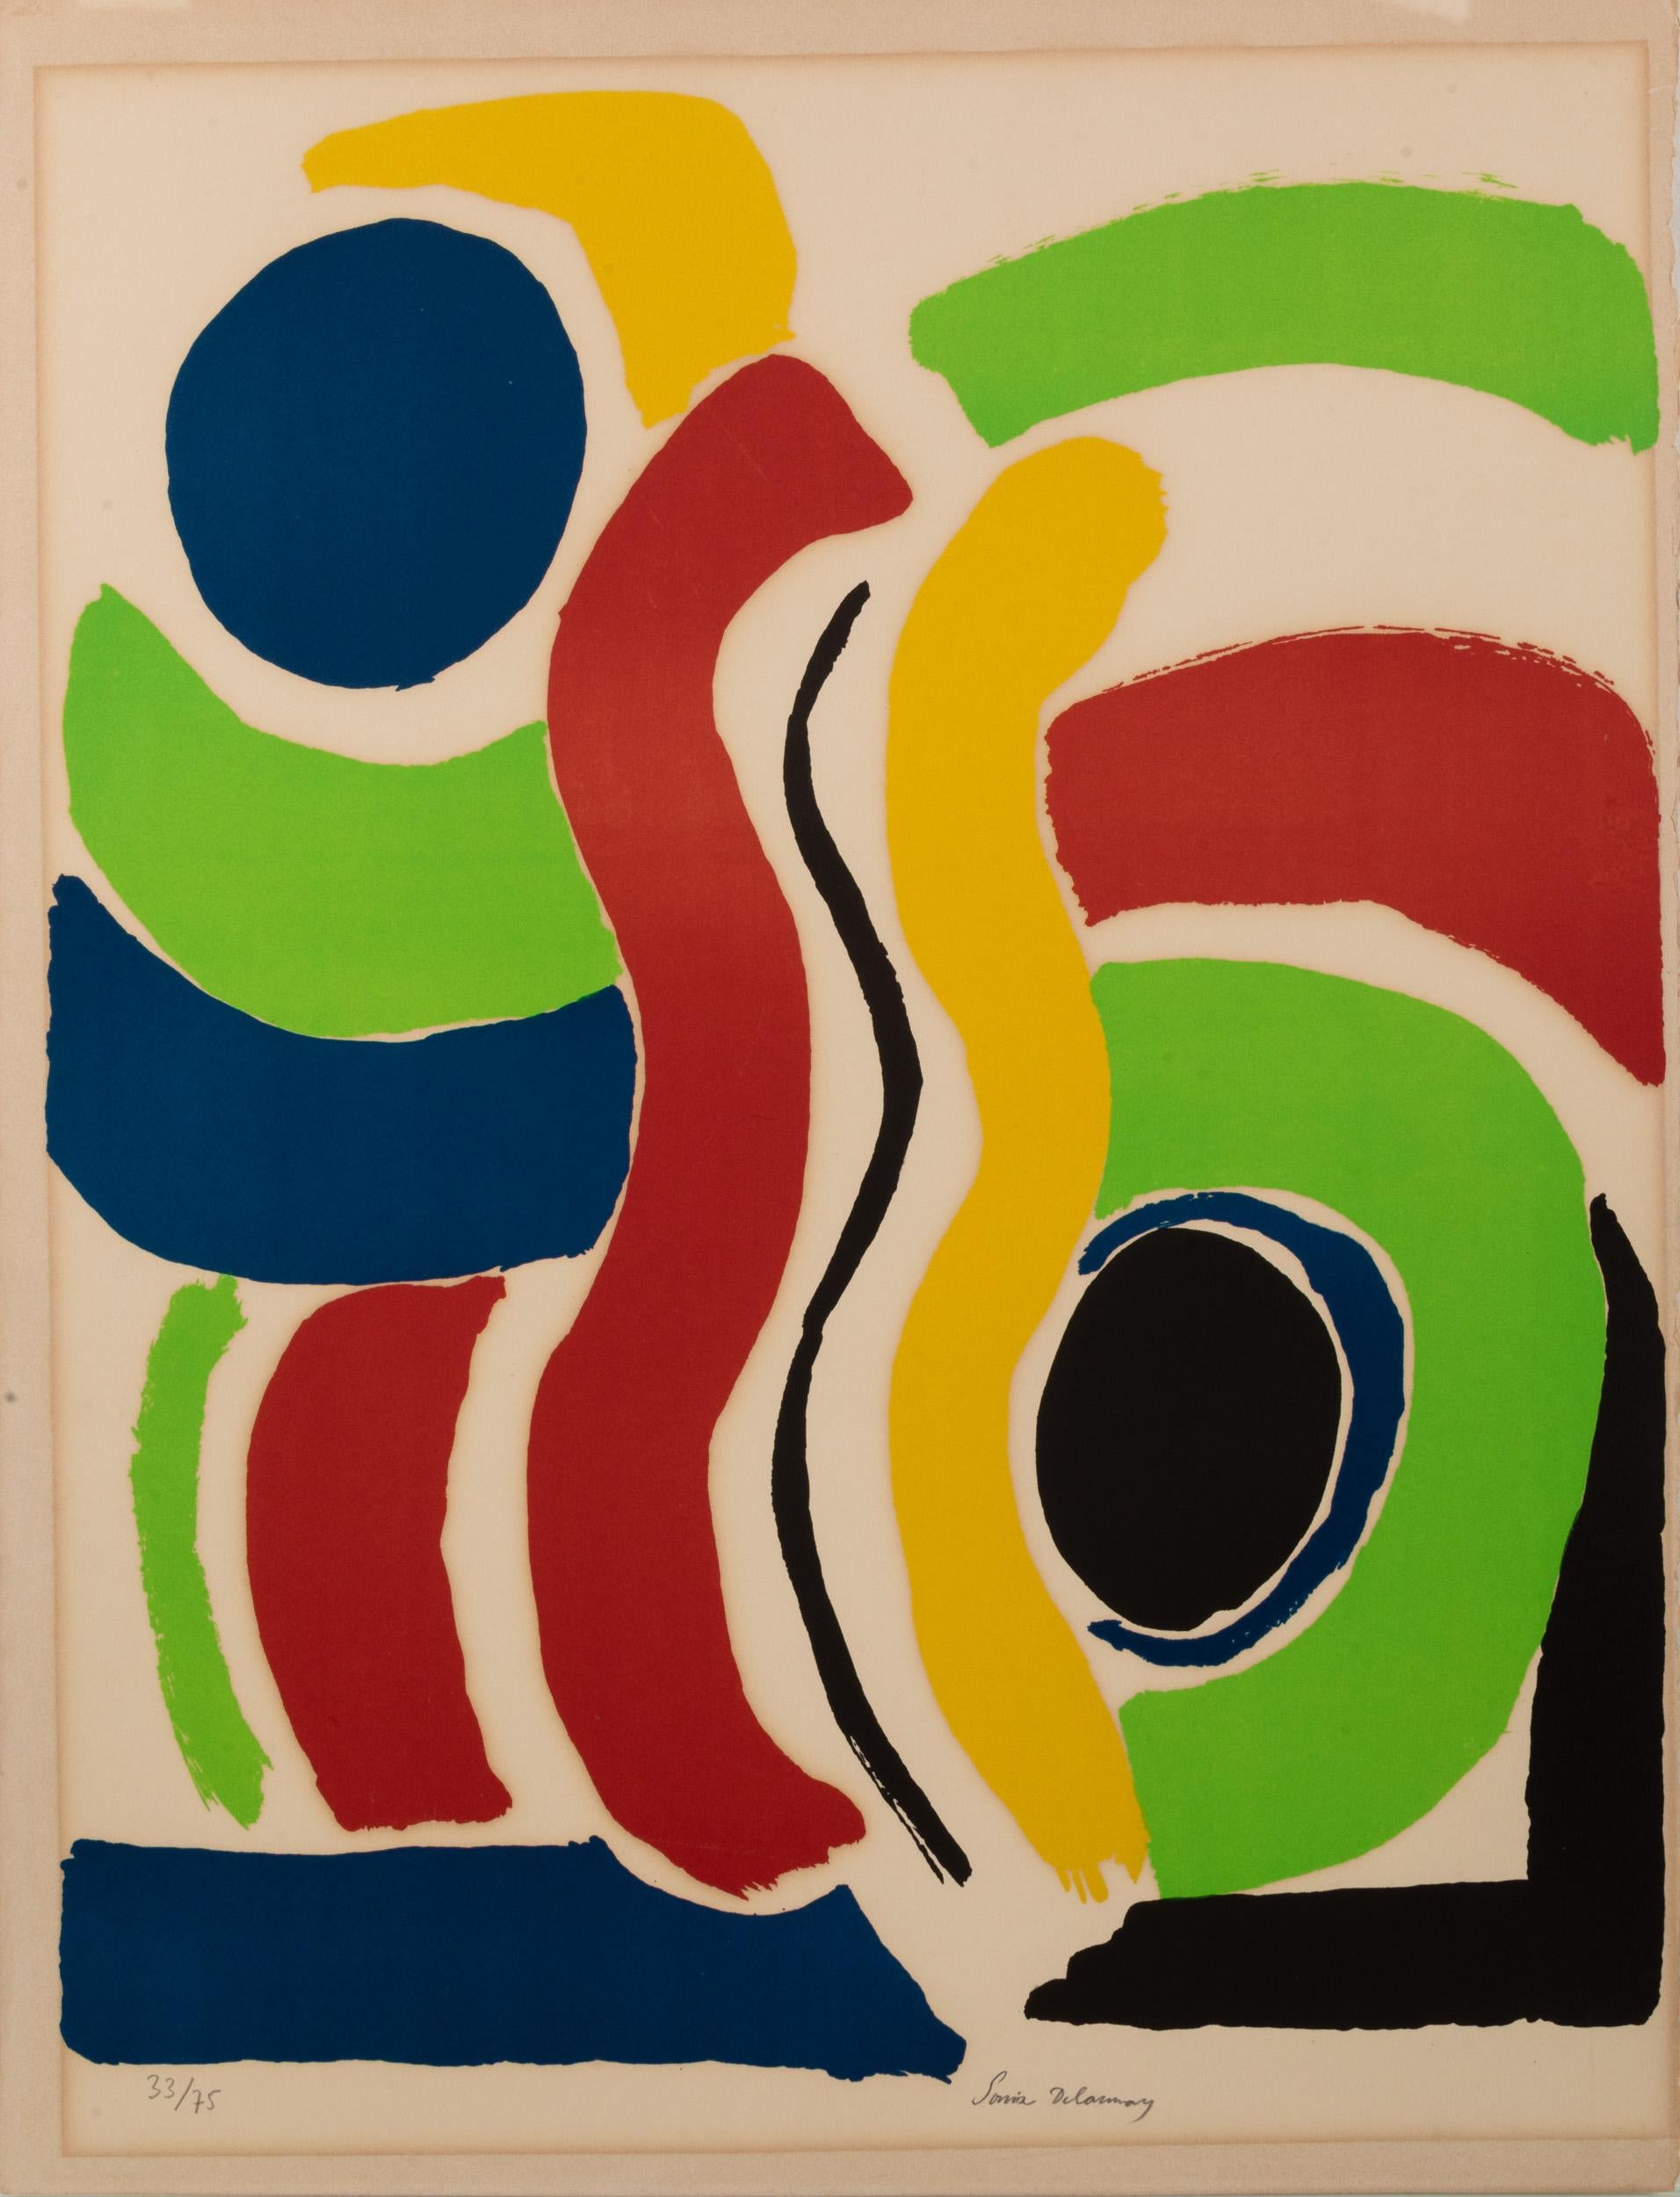 Jeux d'enfants, 1972, Litografia, Cubismo orfico, Orfismo, Colore  - Print by Sonia Delaunay